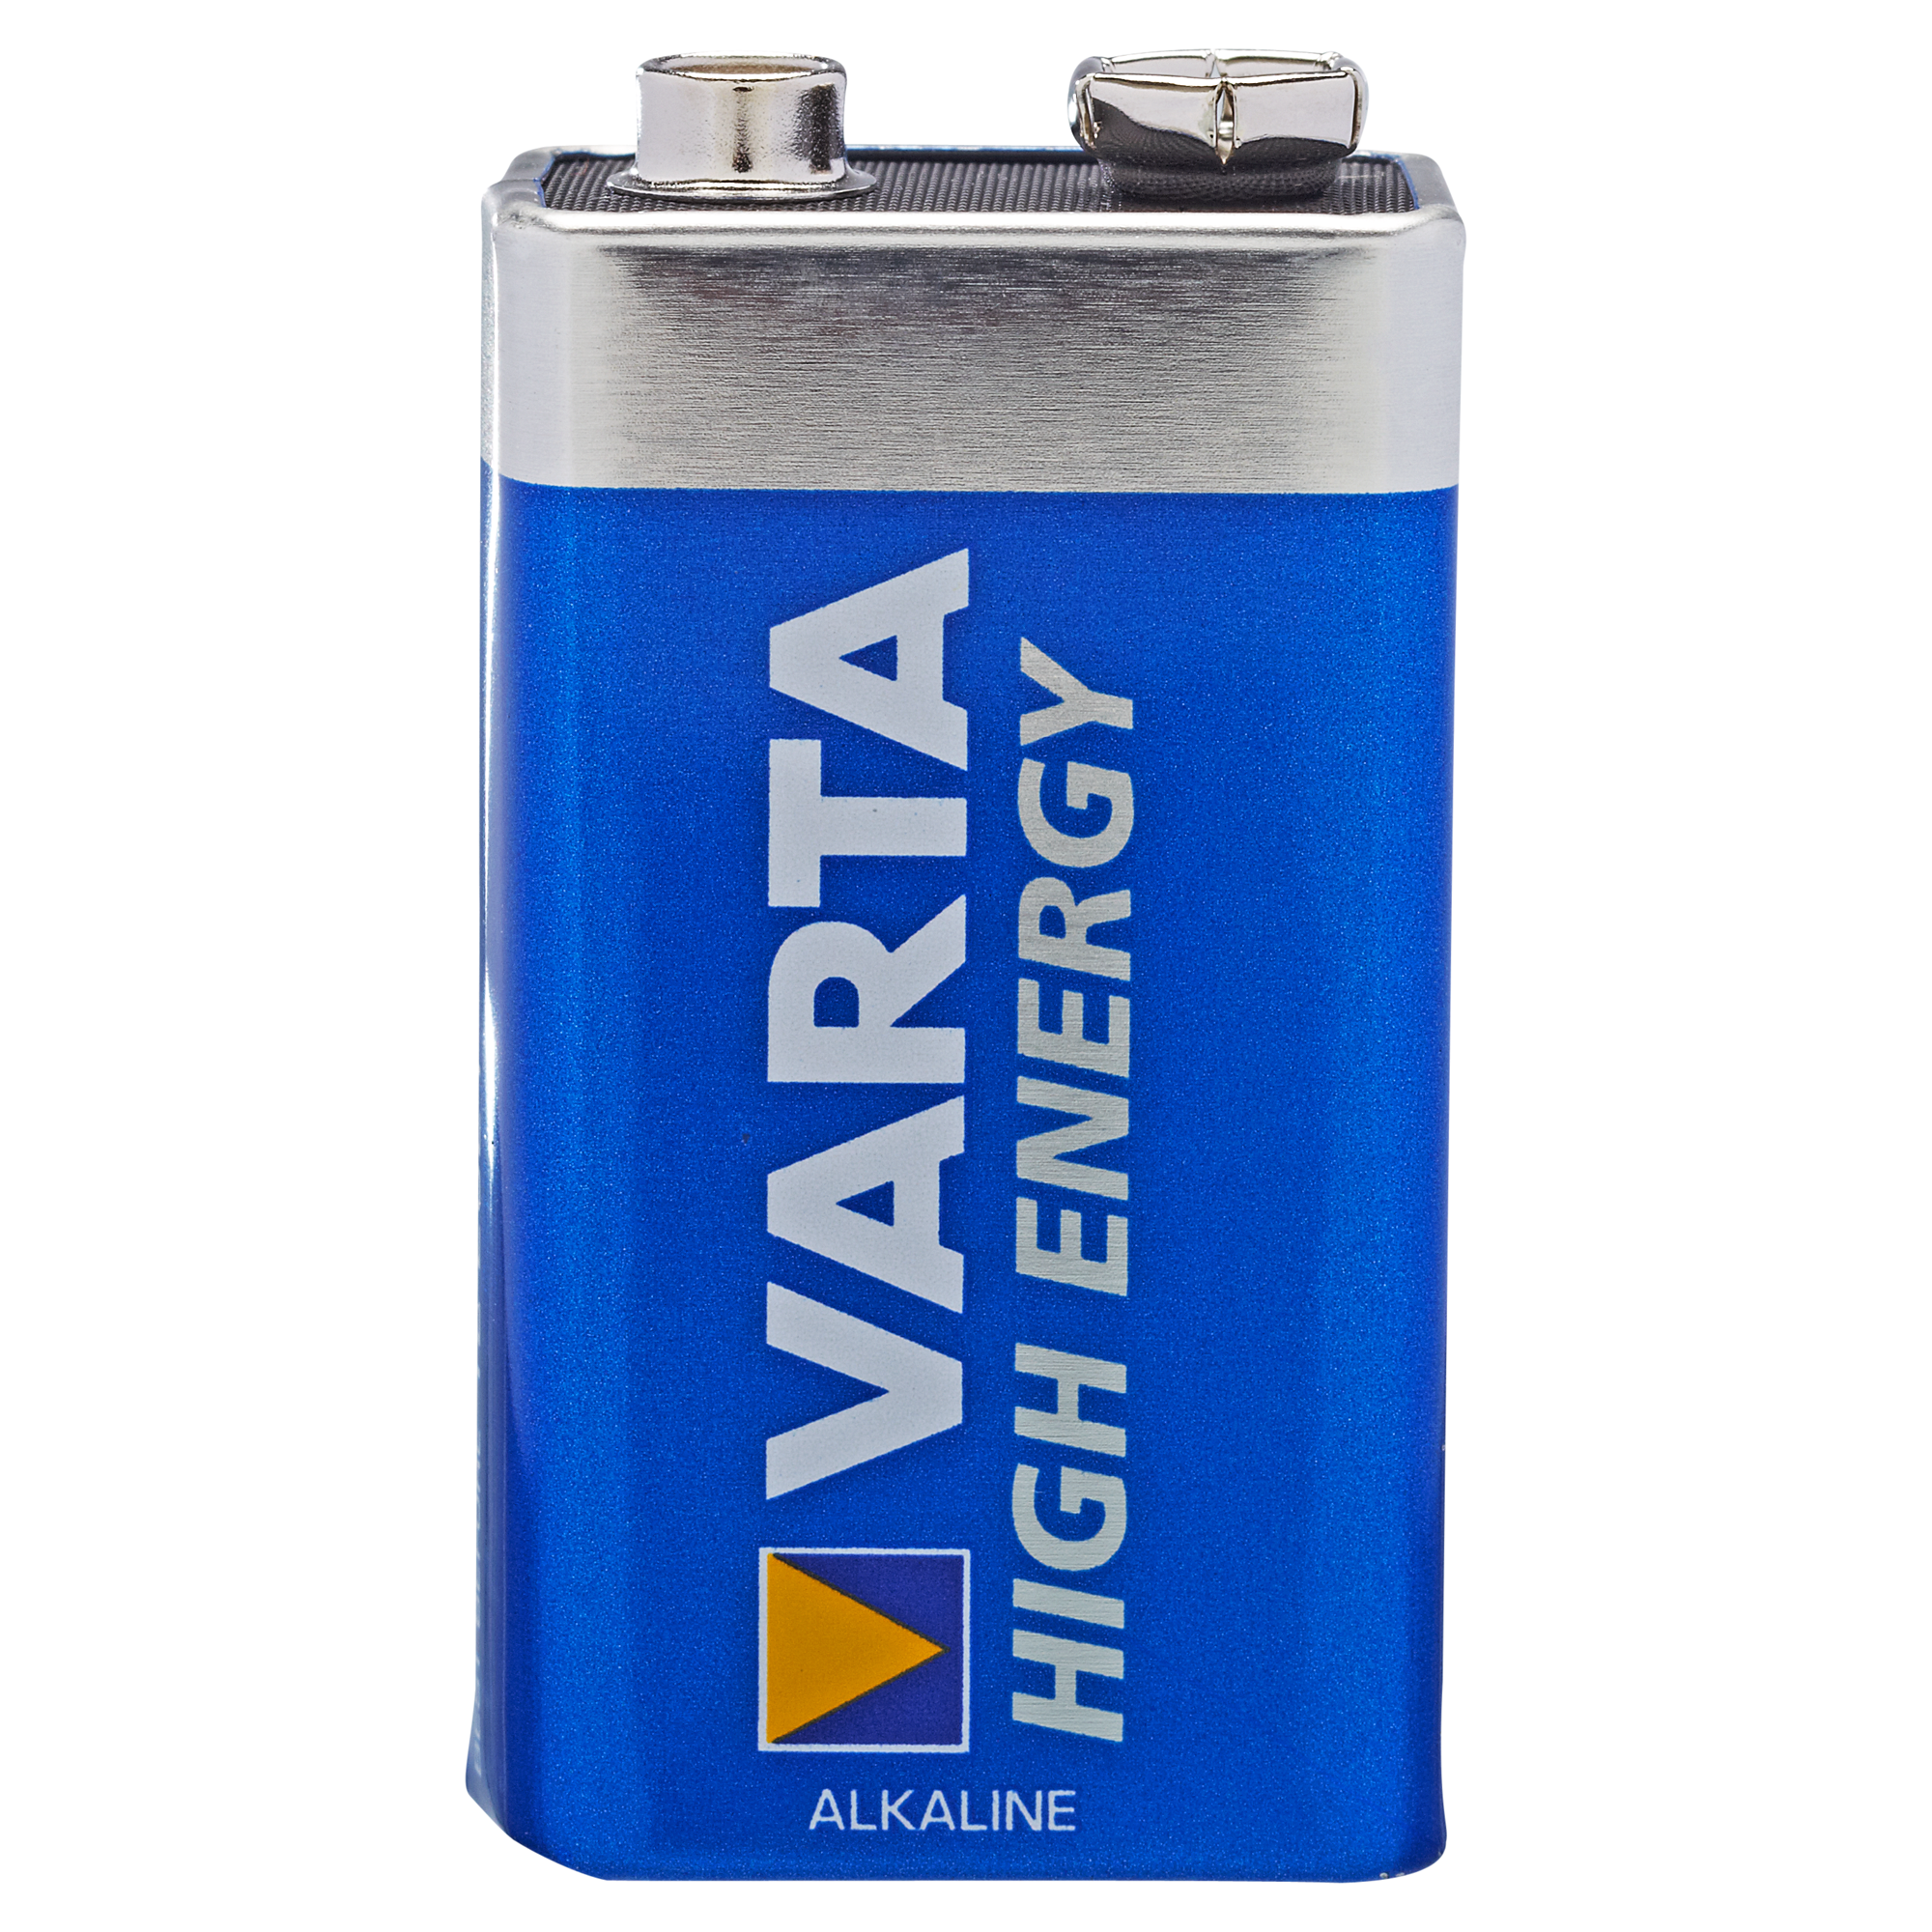 Batterie "High Energy" 9 V E-Block Alkaline + product picture